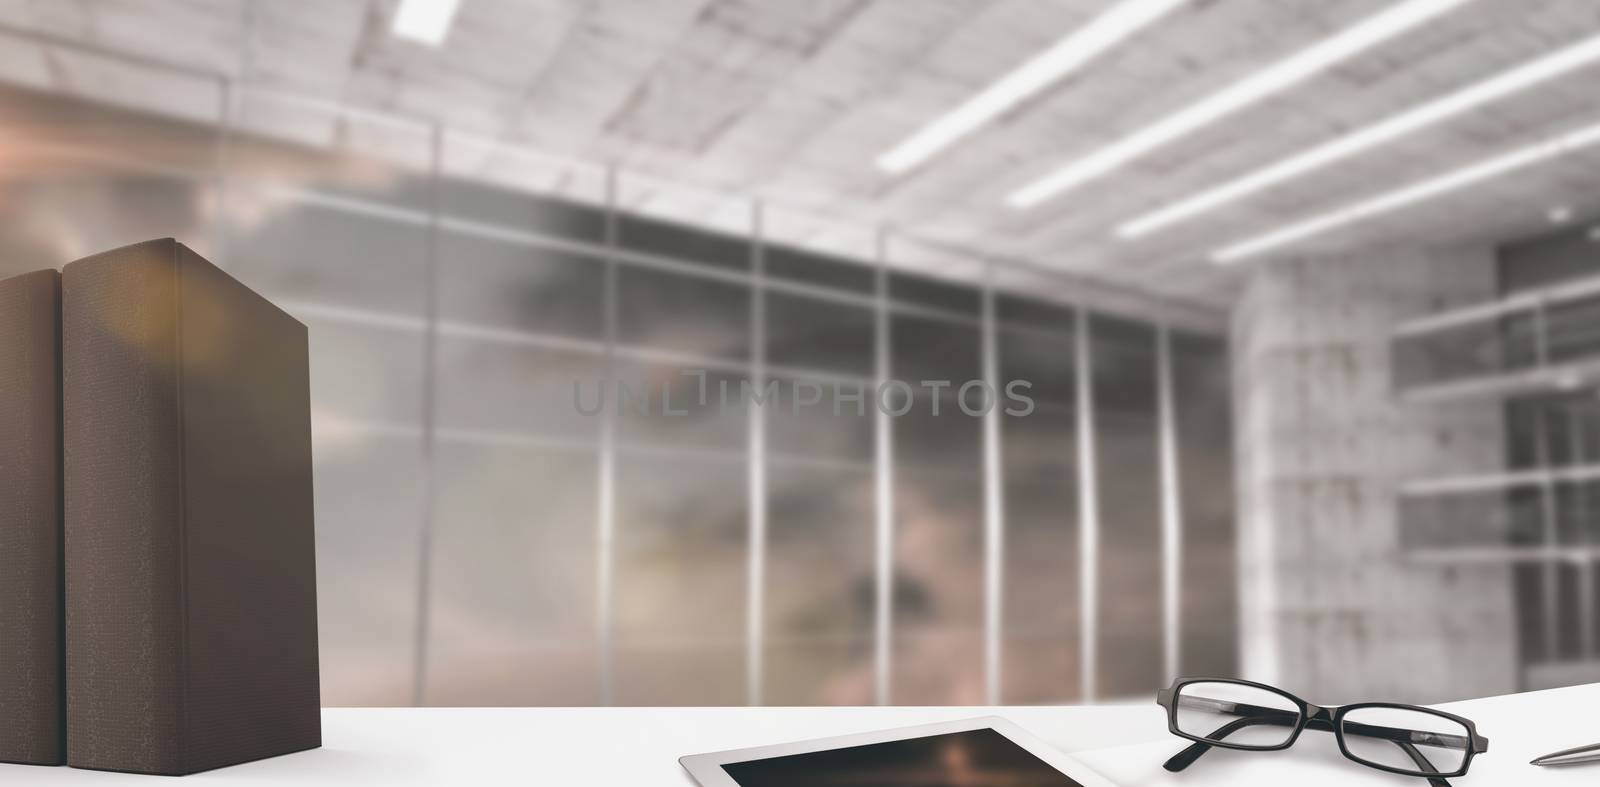 Composite image of desk by Wavebreakmedia